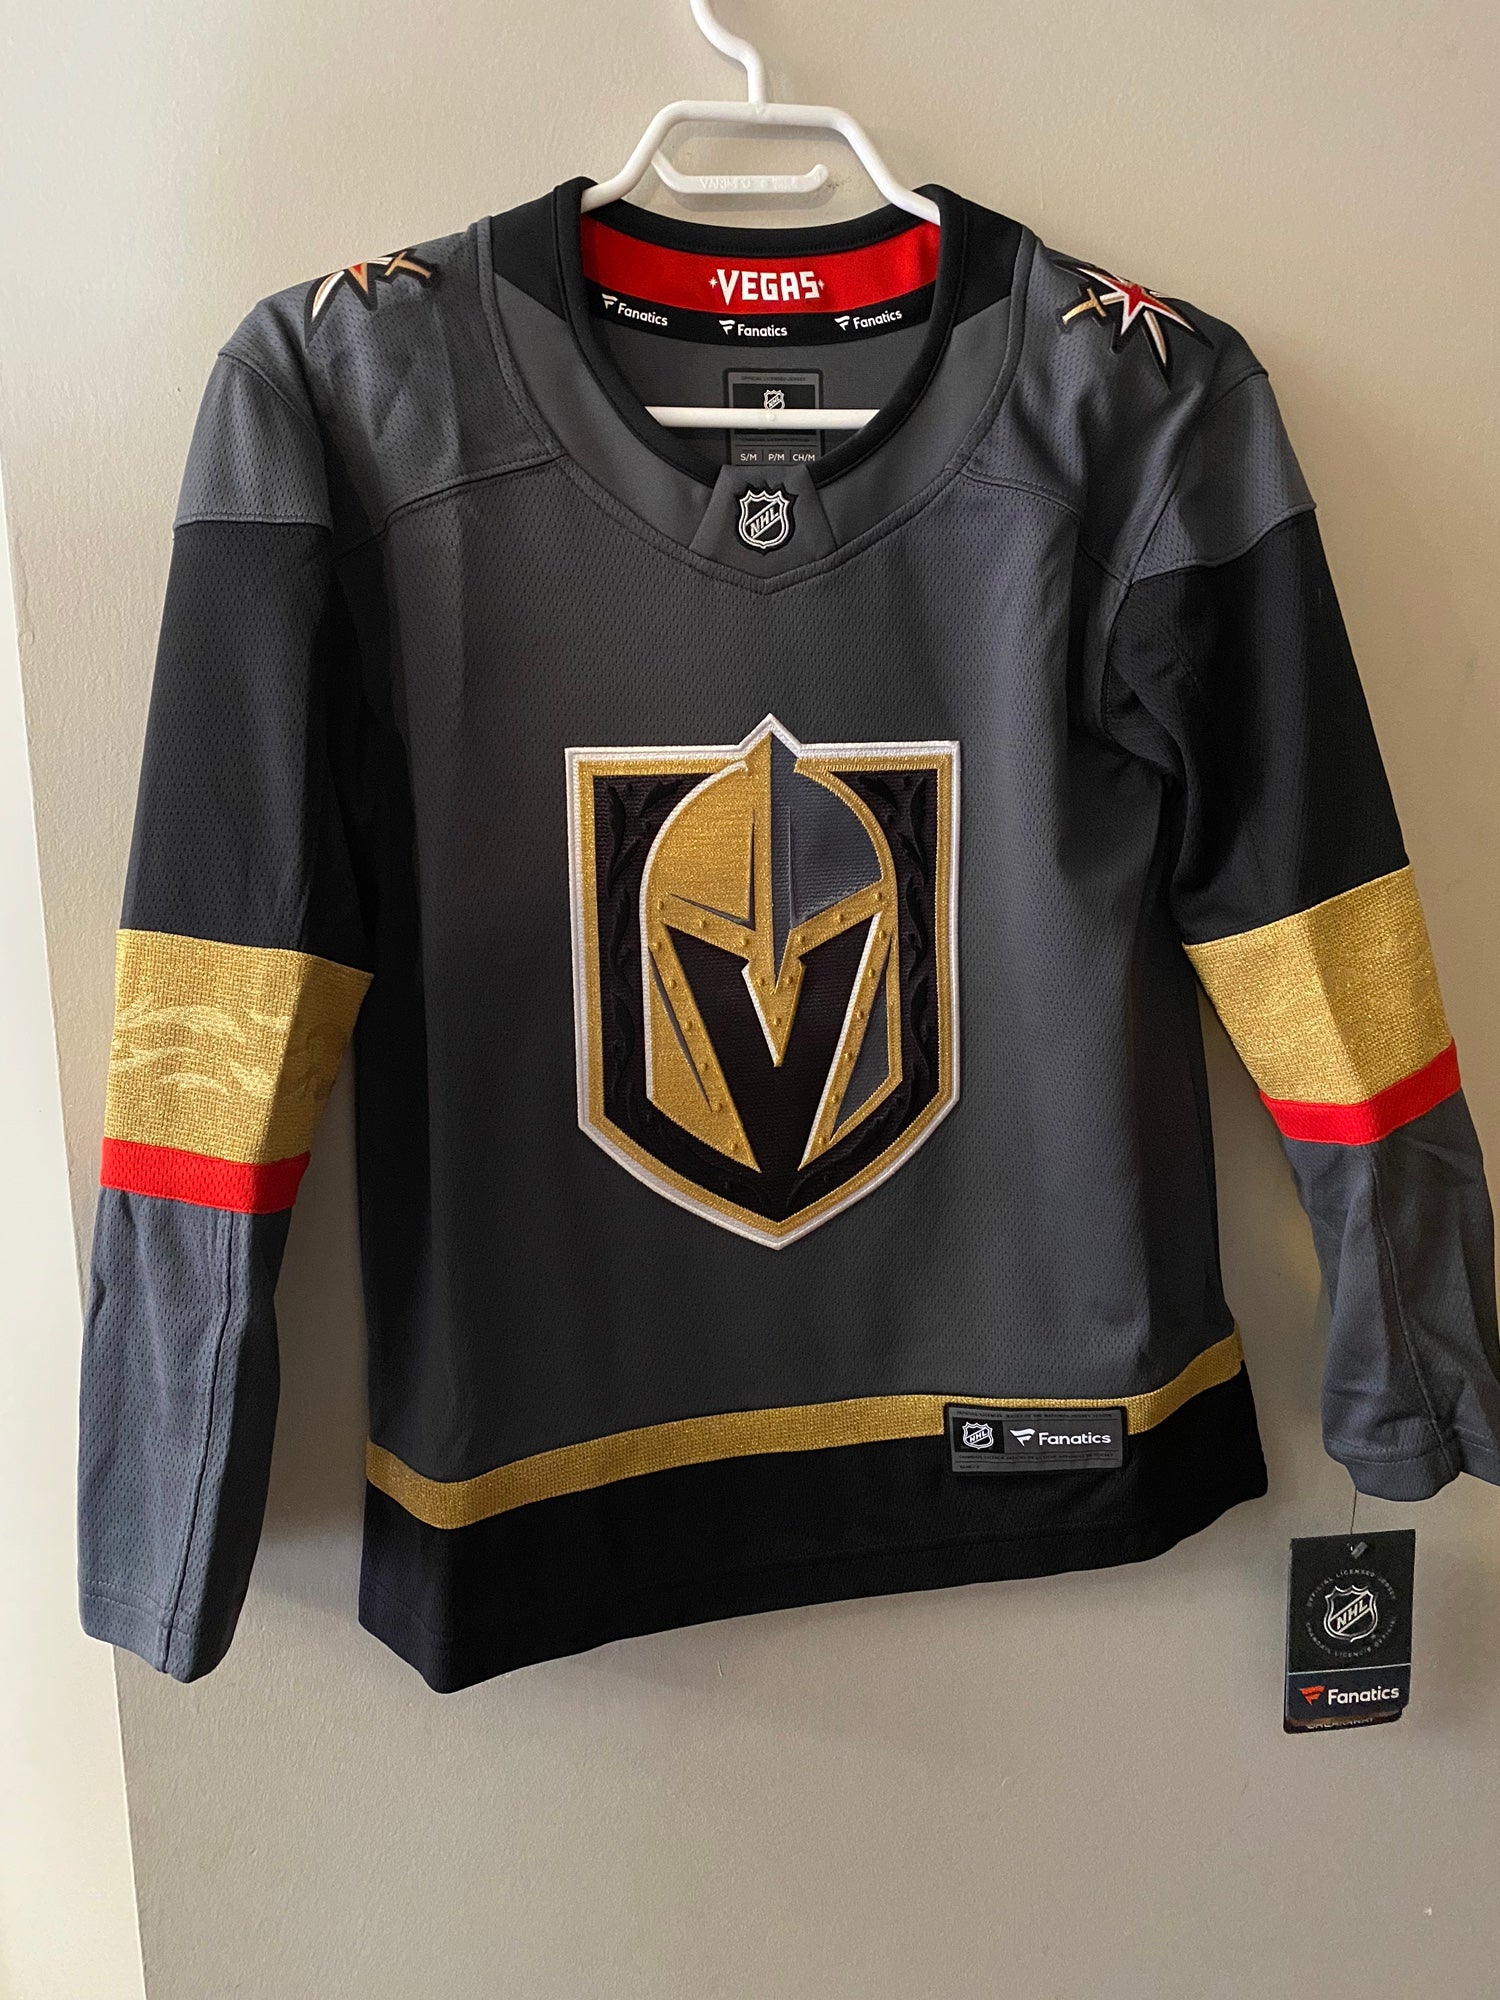 Vegas Golden Knights Jerseys, Knights Jersey Deals, Knights Breakaway  Jerseys, Knights Hockey Sweater